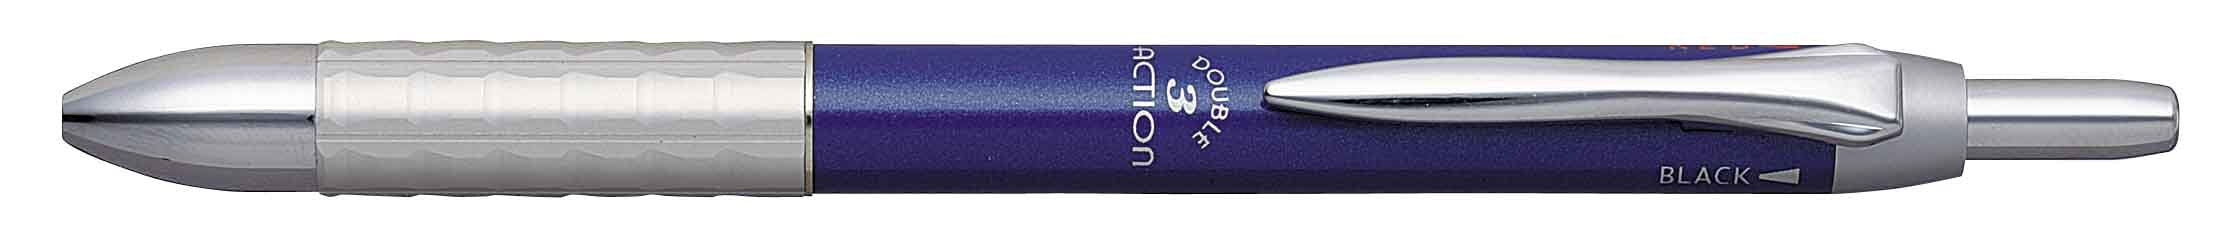 Platinum Multifunctional Fountain Pen Double 3 Action Blue Model Mwbk-3000#56